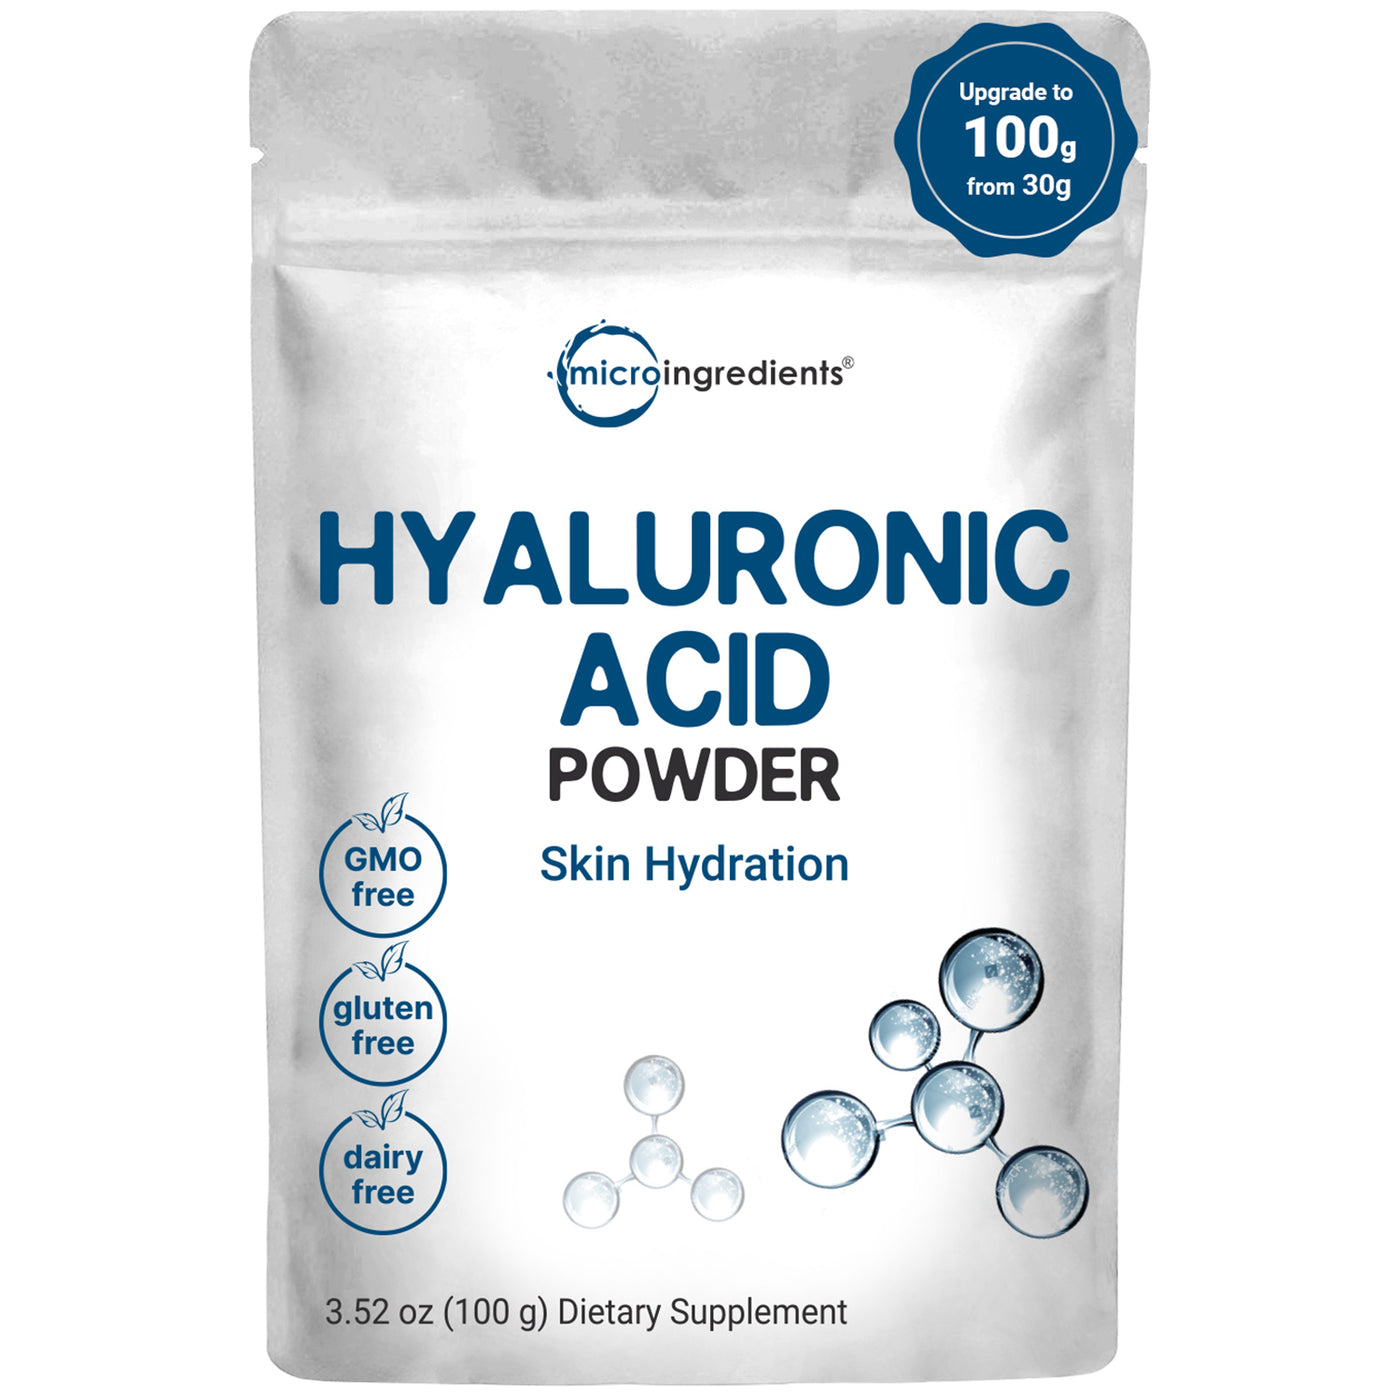 Hyaluronic Acid Powder, DIY Facial Serum, Skin Hydration Care Formula